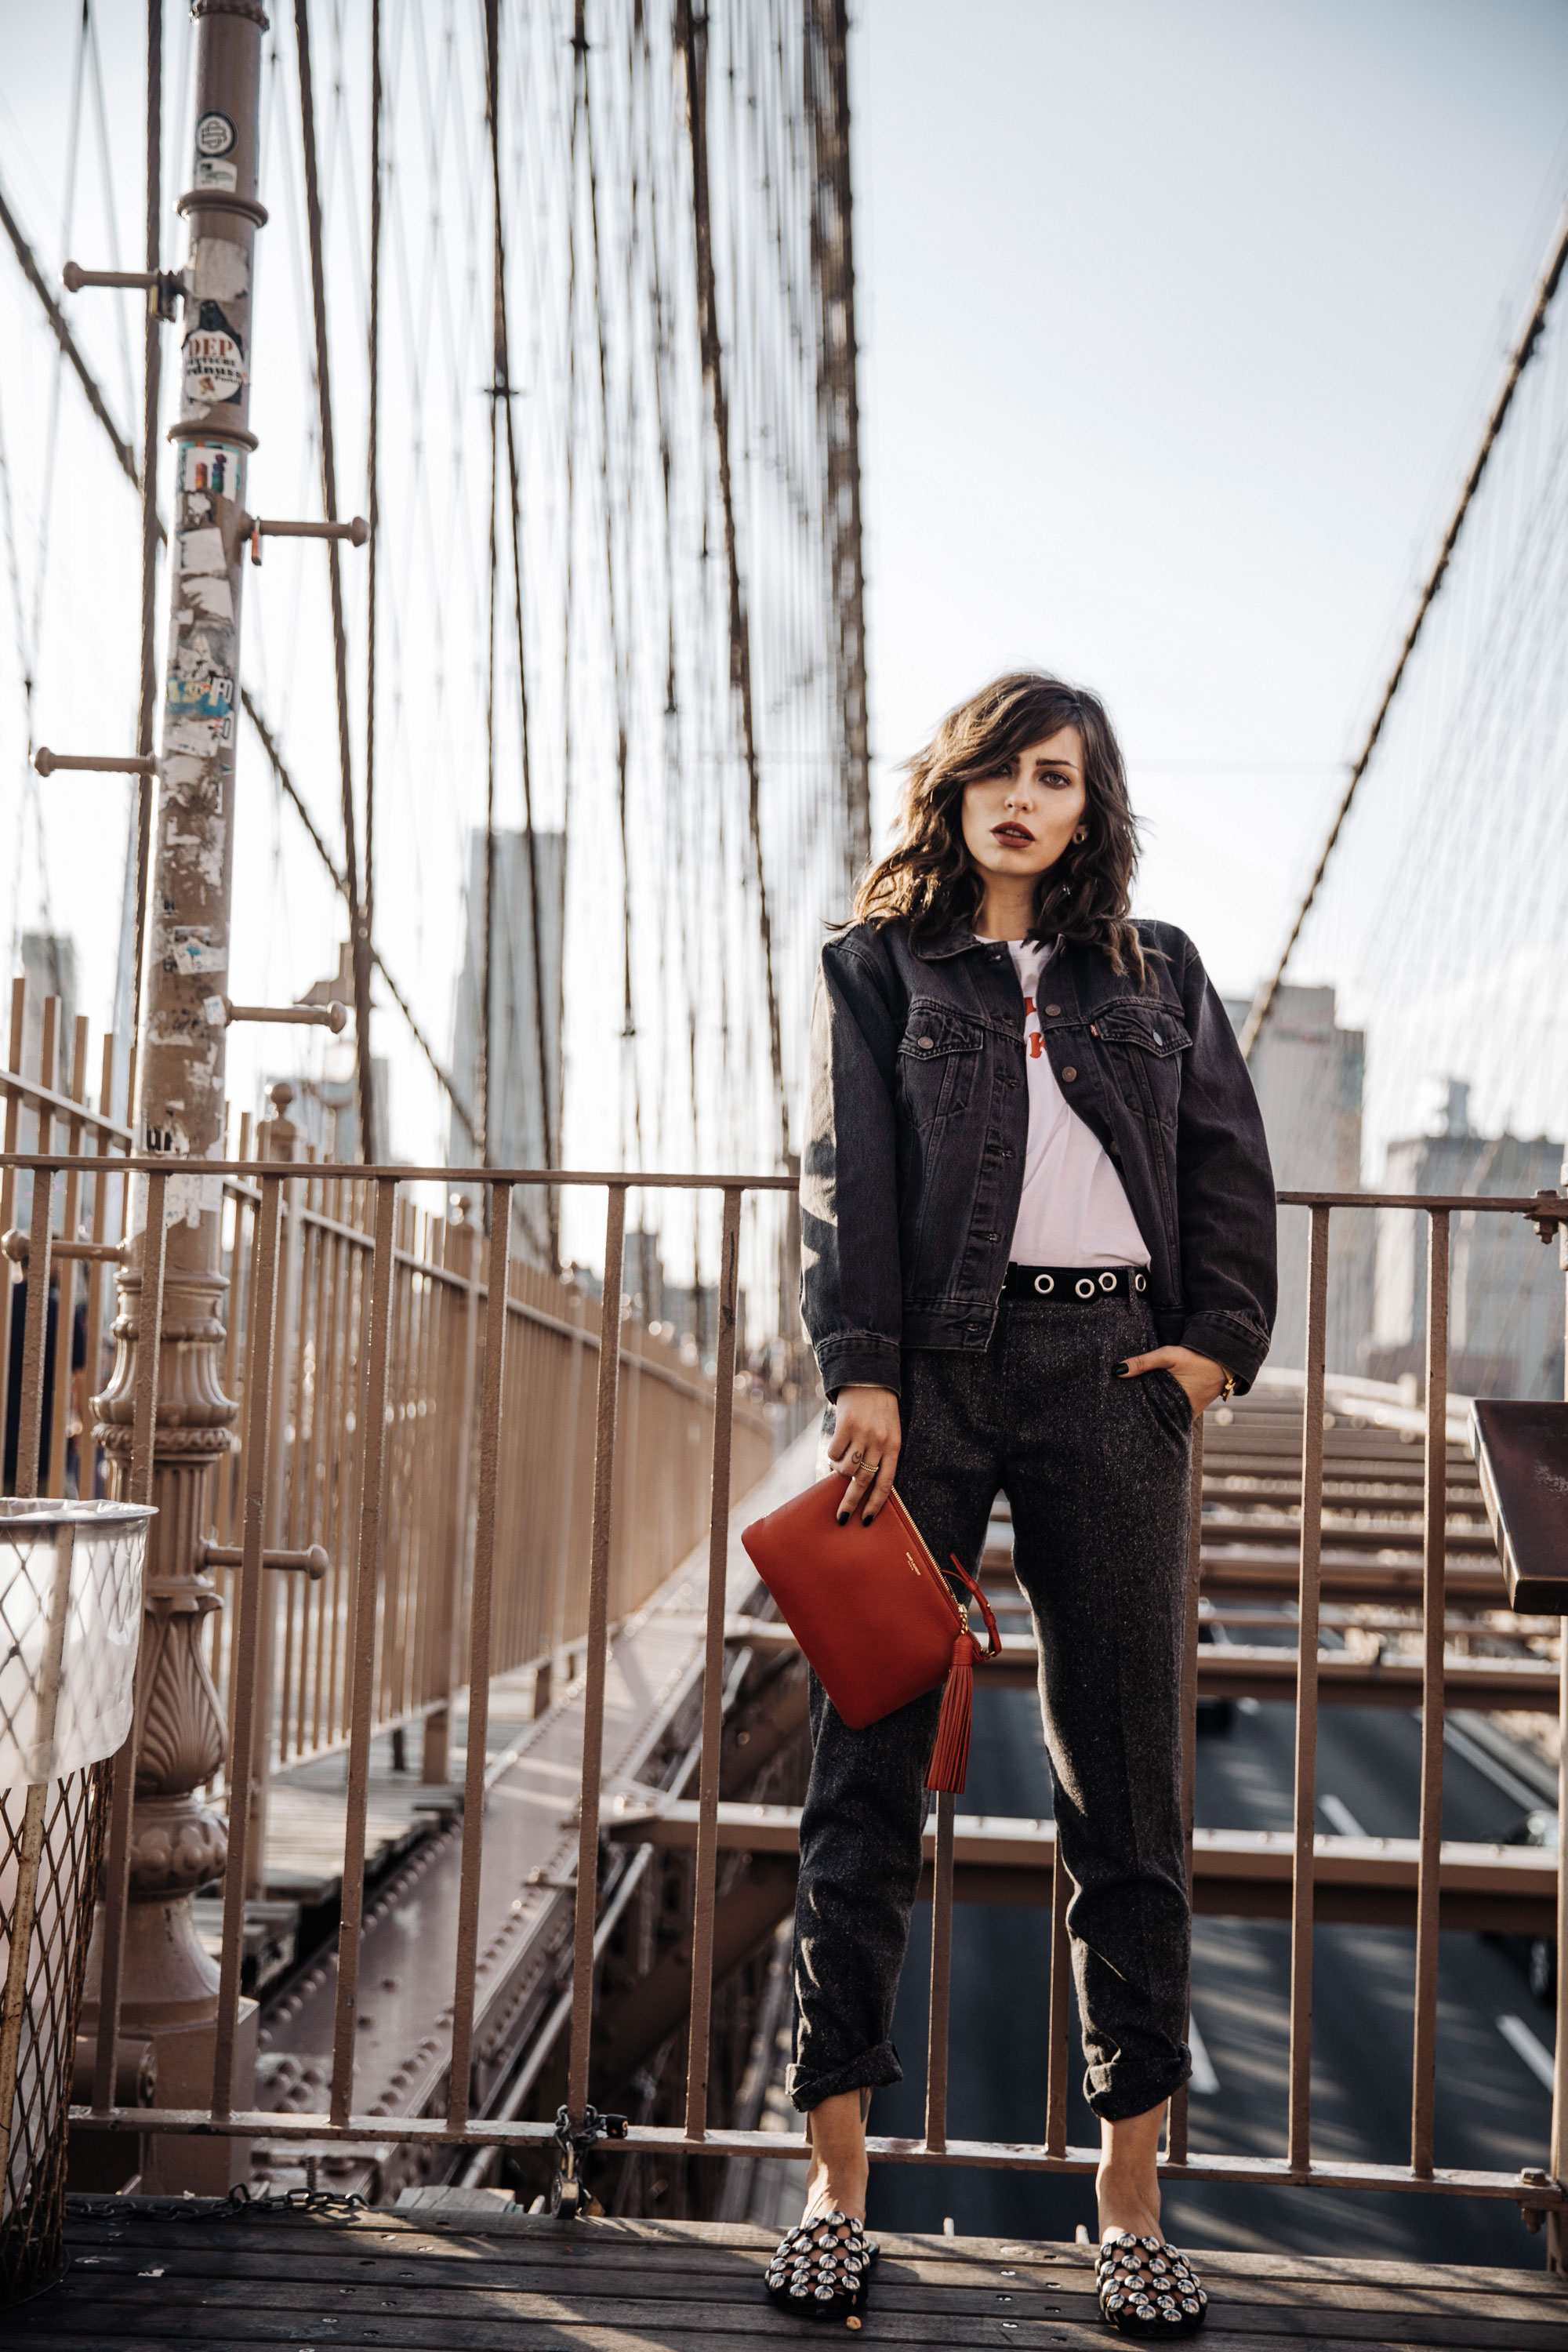 Brooklyn Bridge, New York | Statement Shirt | Blogger Fashion Editorial Summer Shooting | Dumbo | style: happy, freedom, college, edgy, sexy